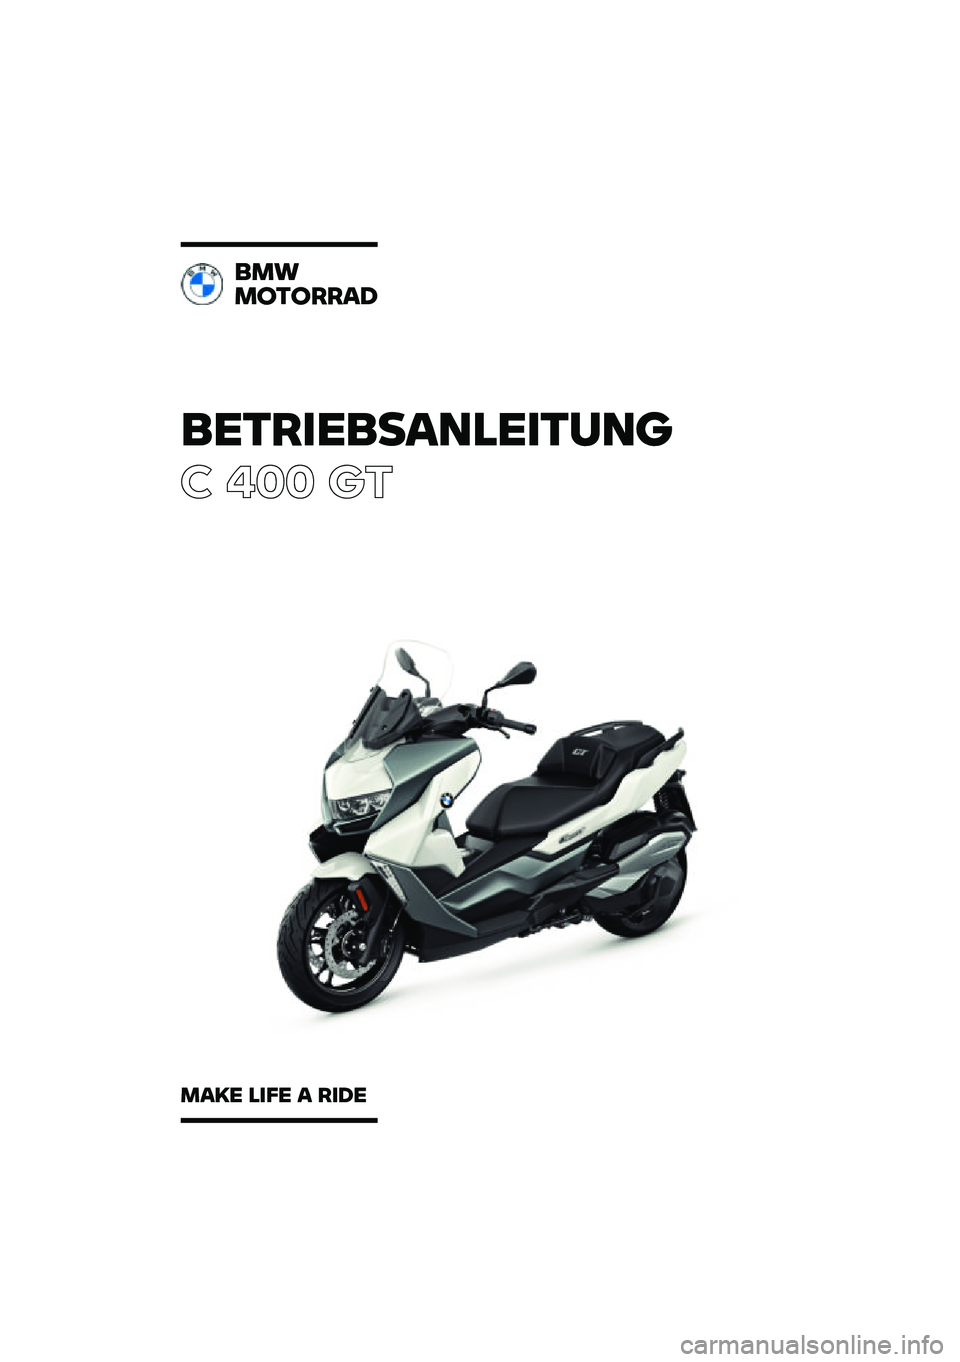 BMW MOTORRAD C 400 GT 2021  Betriebsanleitung (in German) ���������\b�	�
�����	�\f
� ��� ��\b
��
�
�
������\b�
�
�\b�� �
��� �\b ���� 